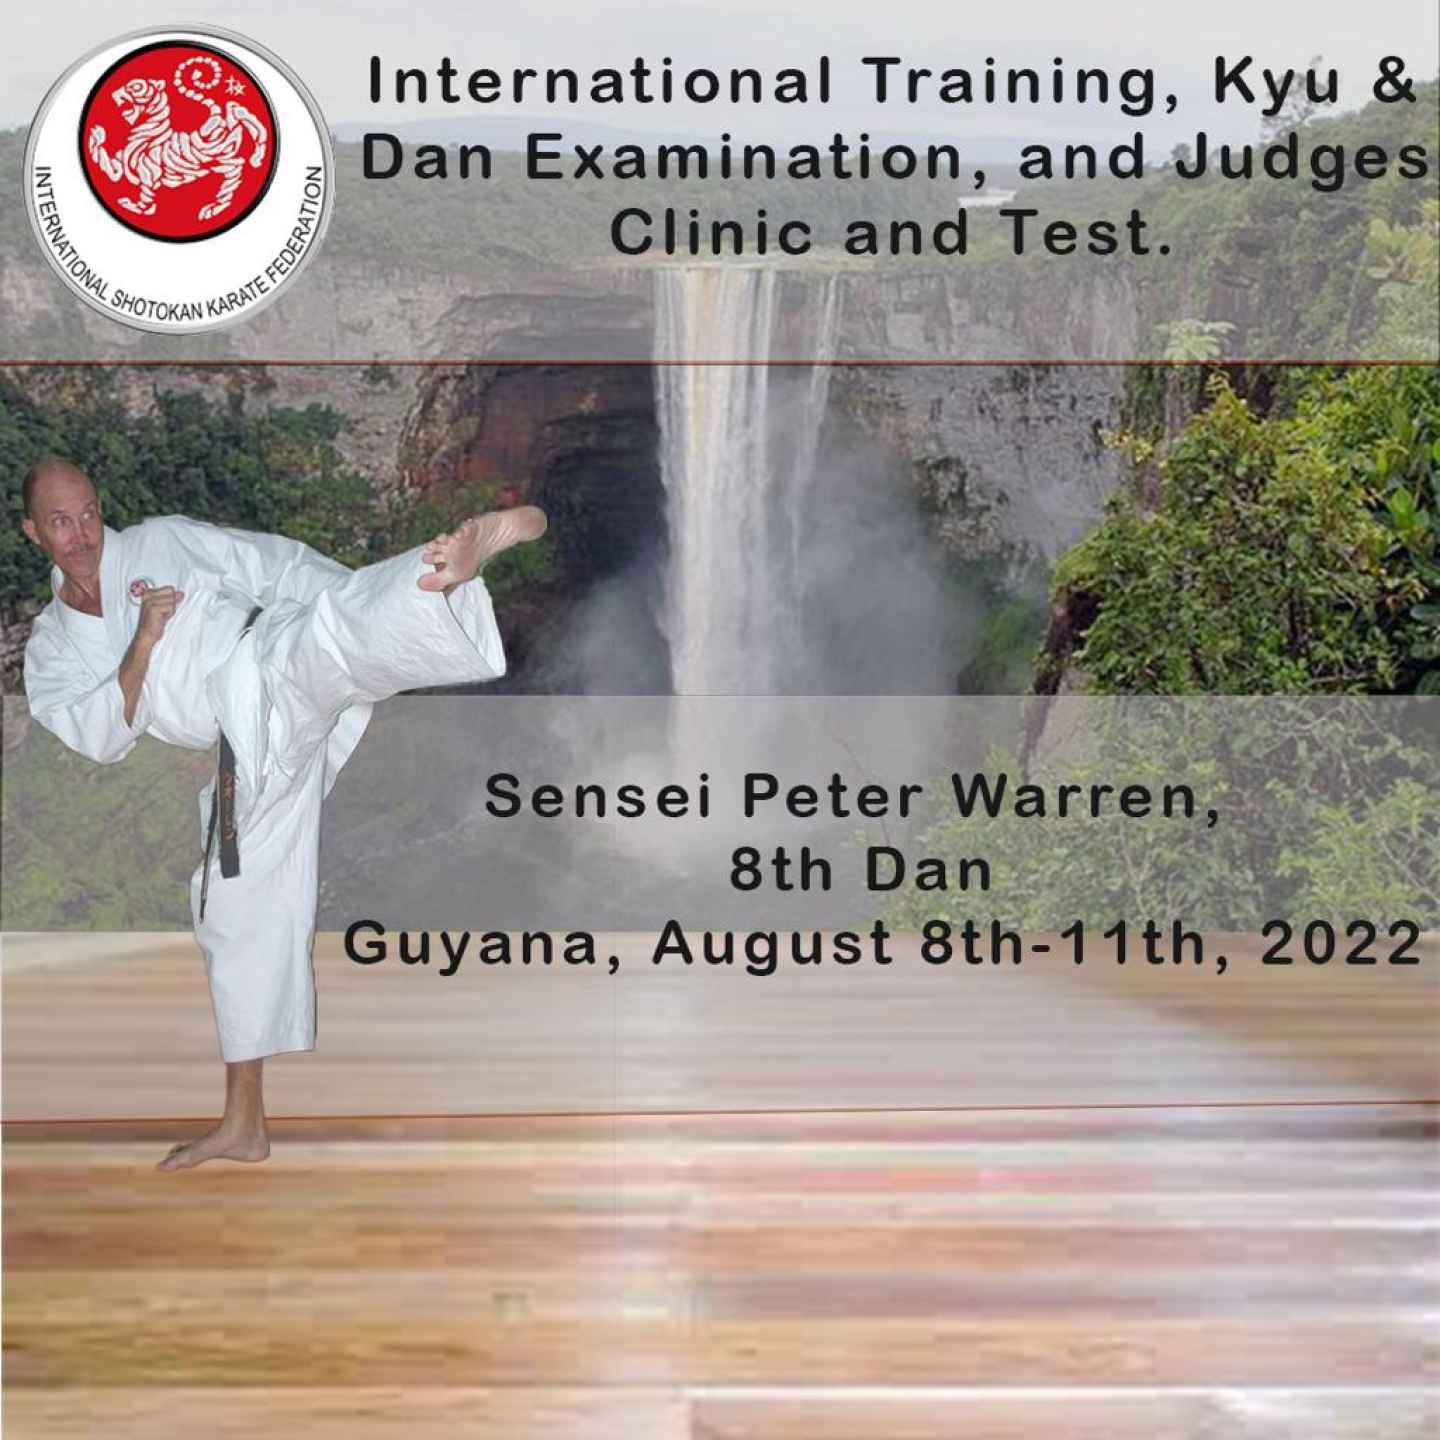 International Training & Exams with Sensei Peter Warren @ Guyana, August 8-11, 2022.